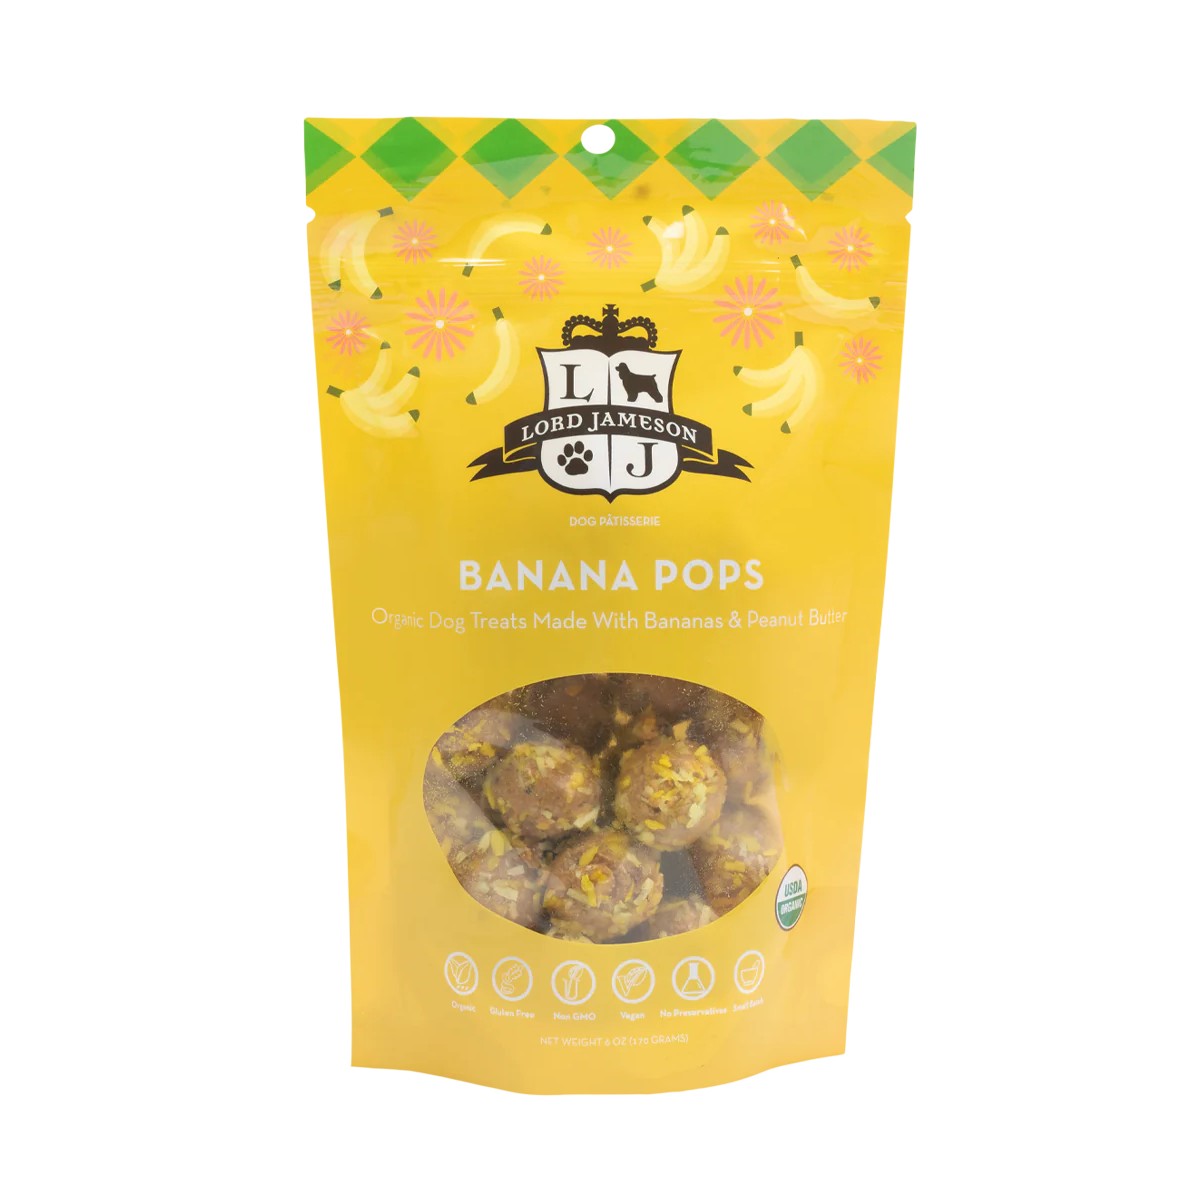 Lord Jameson Organic Dog Treats - Banana Pops